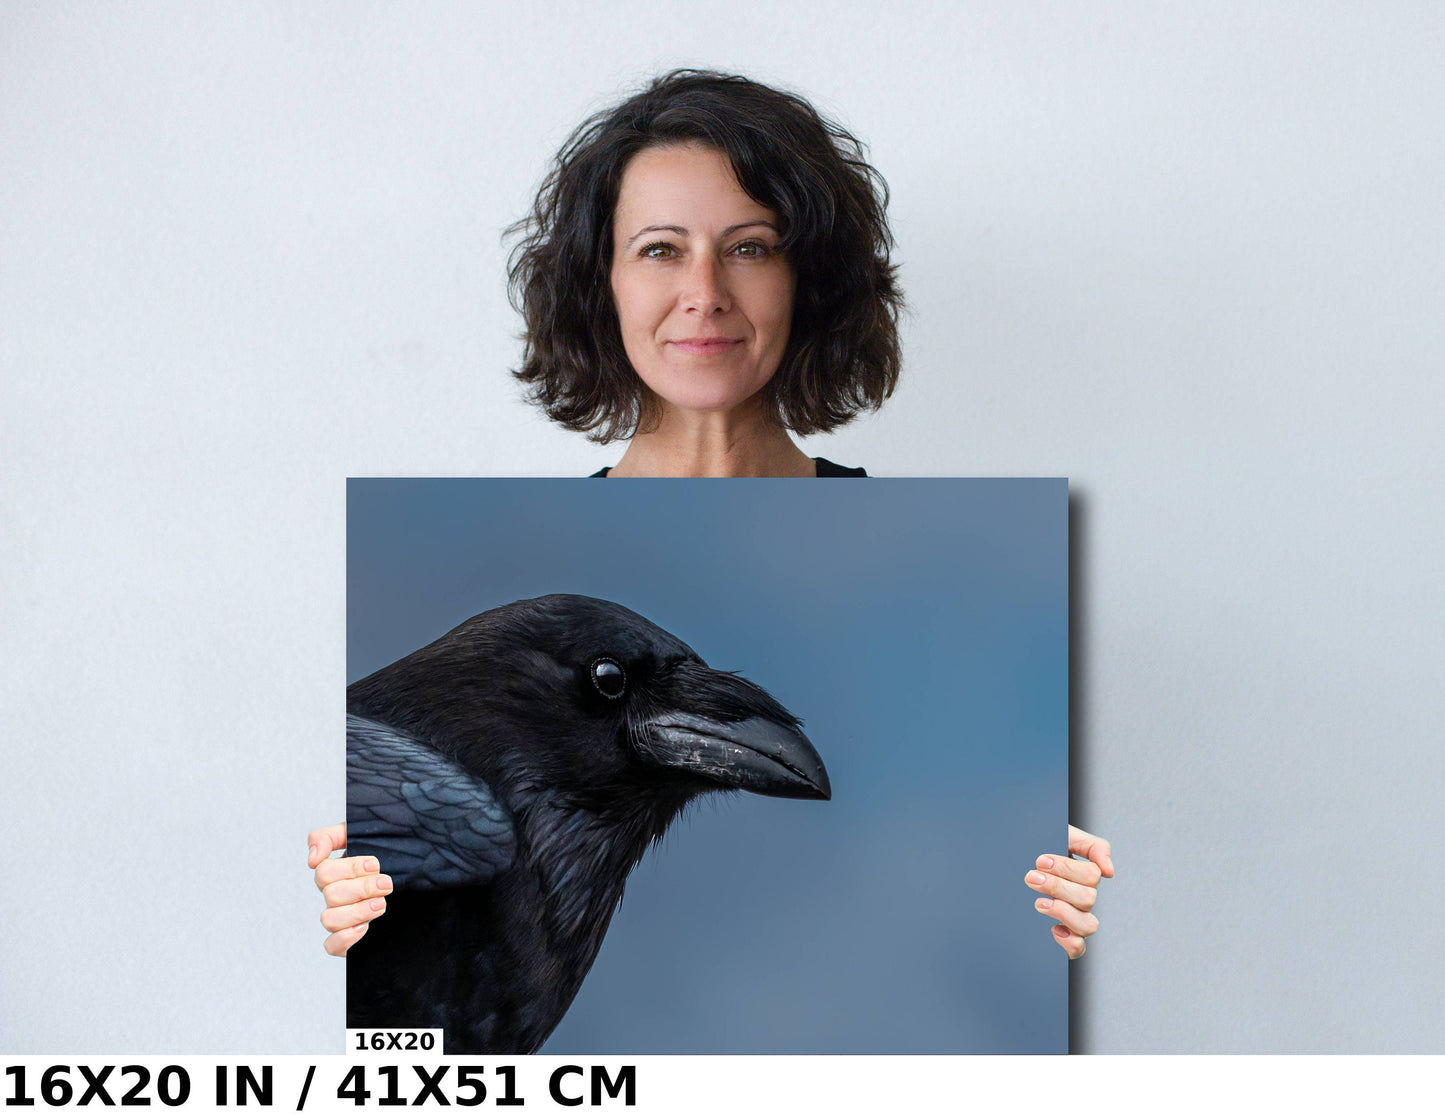 Raven Radiance: Half-Body Shots of Common Raven Wall Art Bird Photography Metal Canvas Print